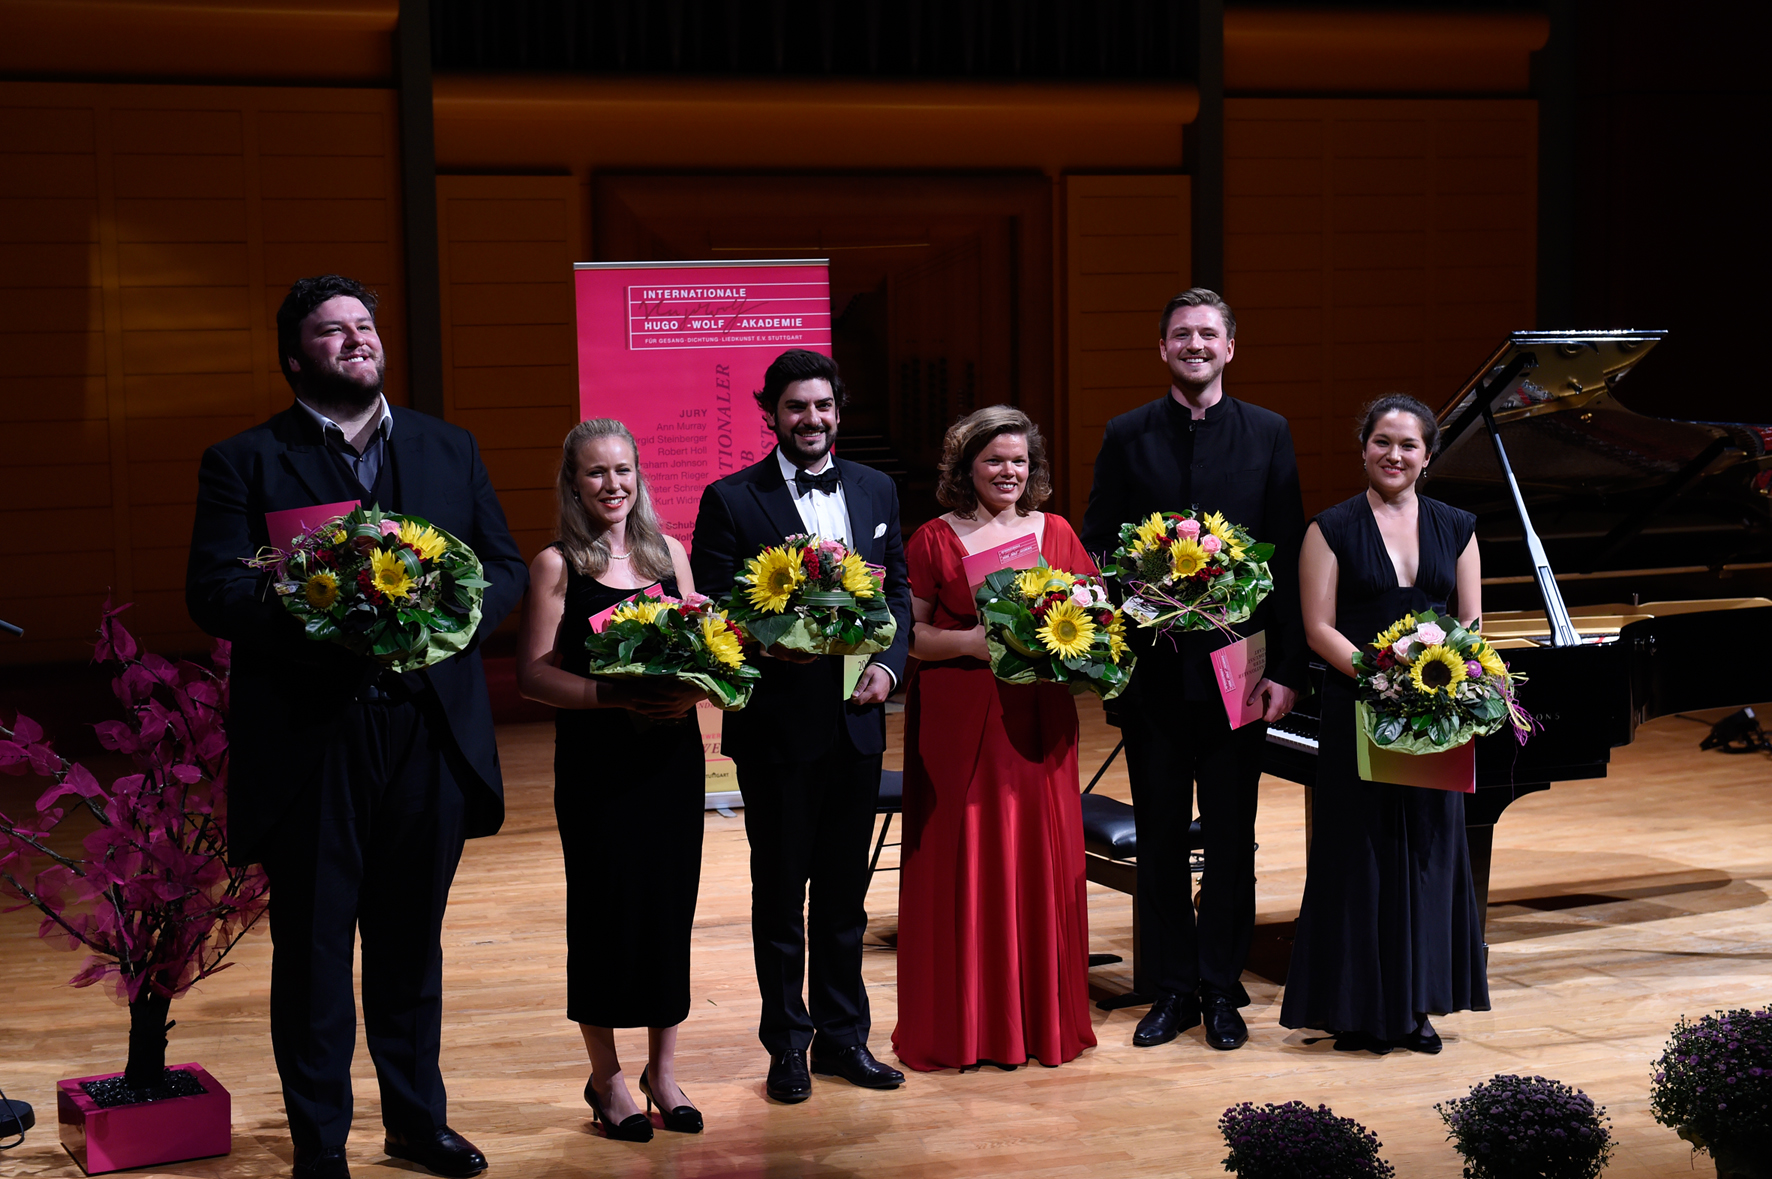 Die Gewinner im Jahr 2016 lauteten: 1. Preis: Ilker Arcayürek (Tenor) & Fiona Pollak (Klavier), 2. Preis: Stuart Jackson (Tenor) & Jocelyn Freeman (Klavier), 3. Preis: Samuel Hasselhorn (Bariton) & Renate Rohlfing (Klavier)